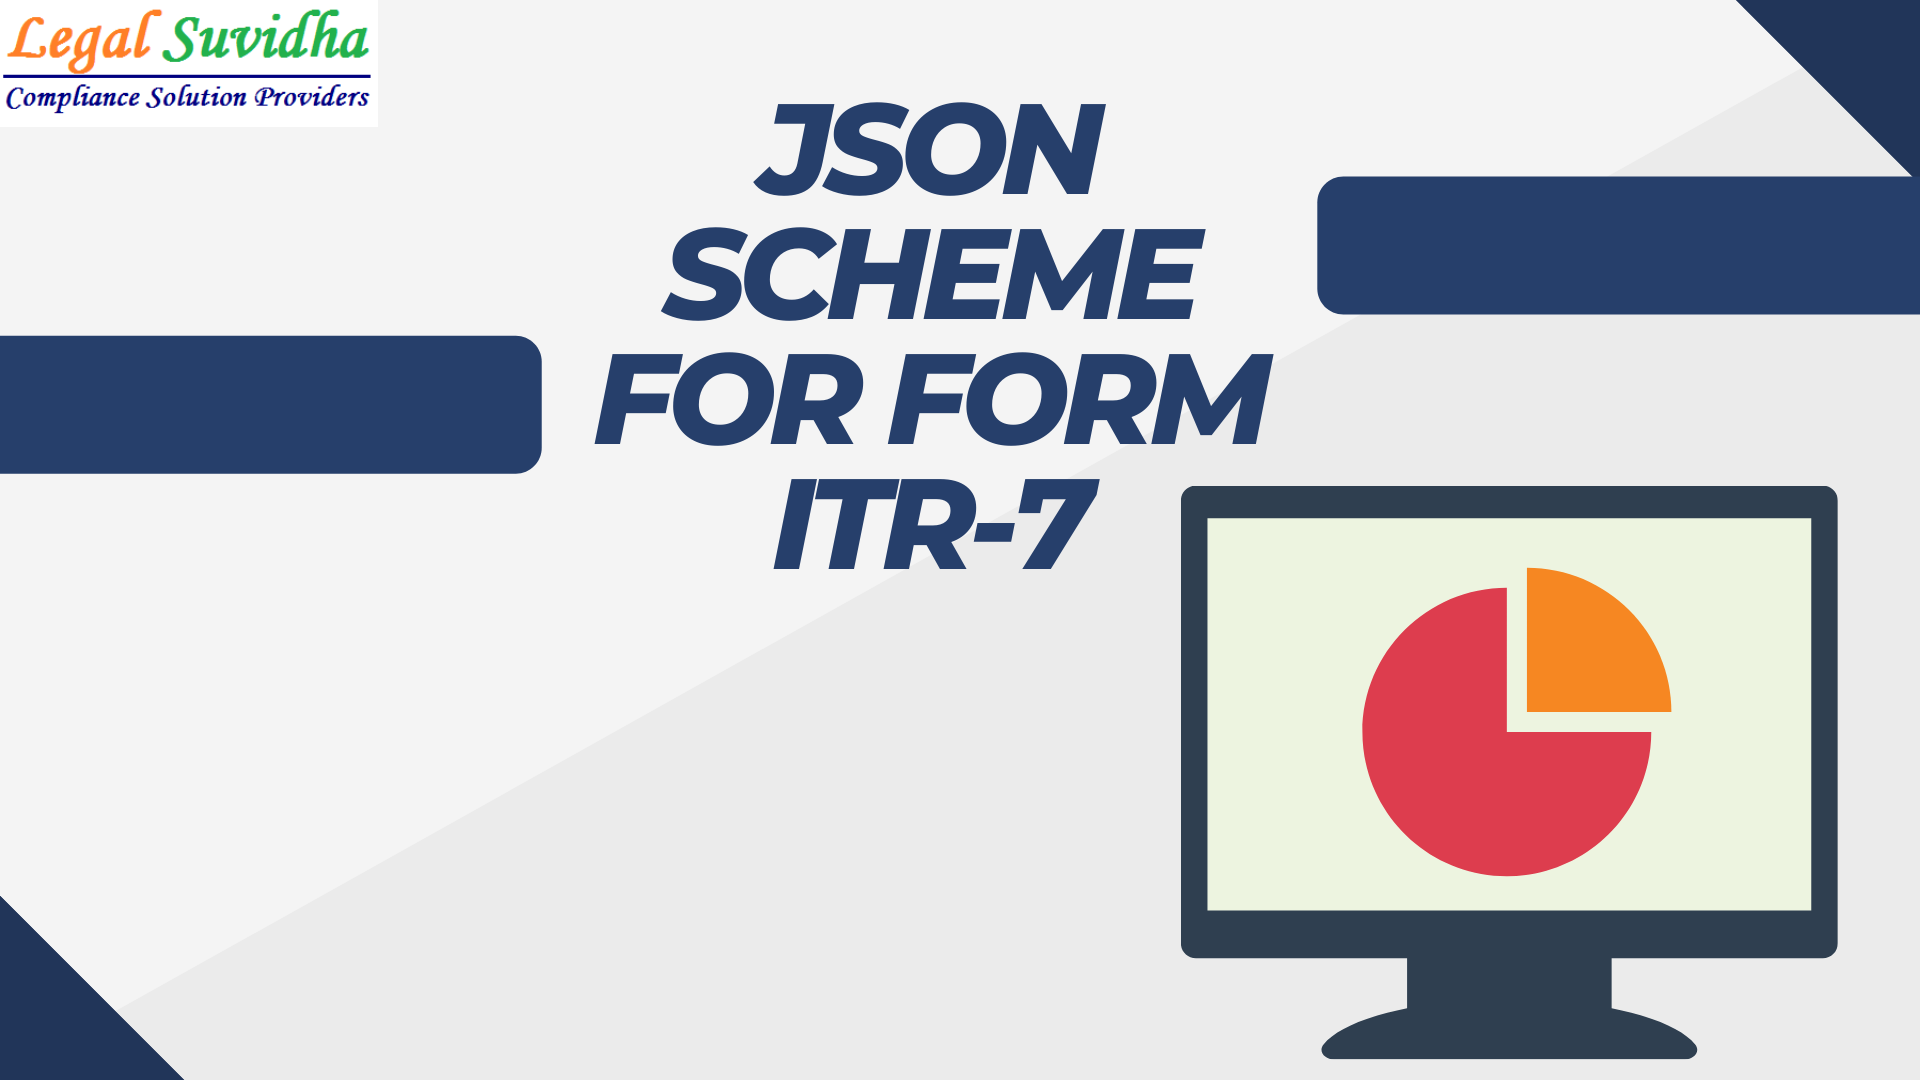 JSON Scheme for Form ITR-7